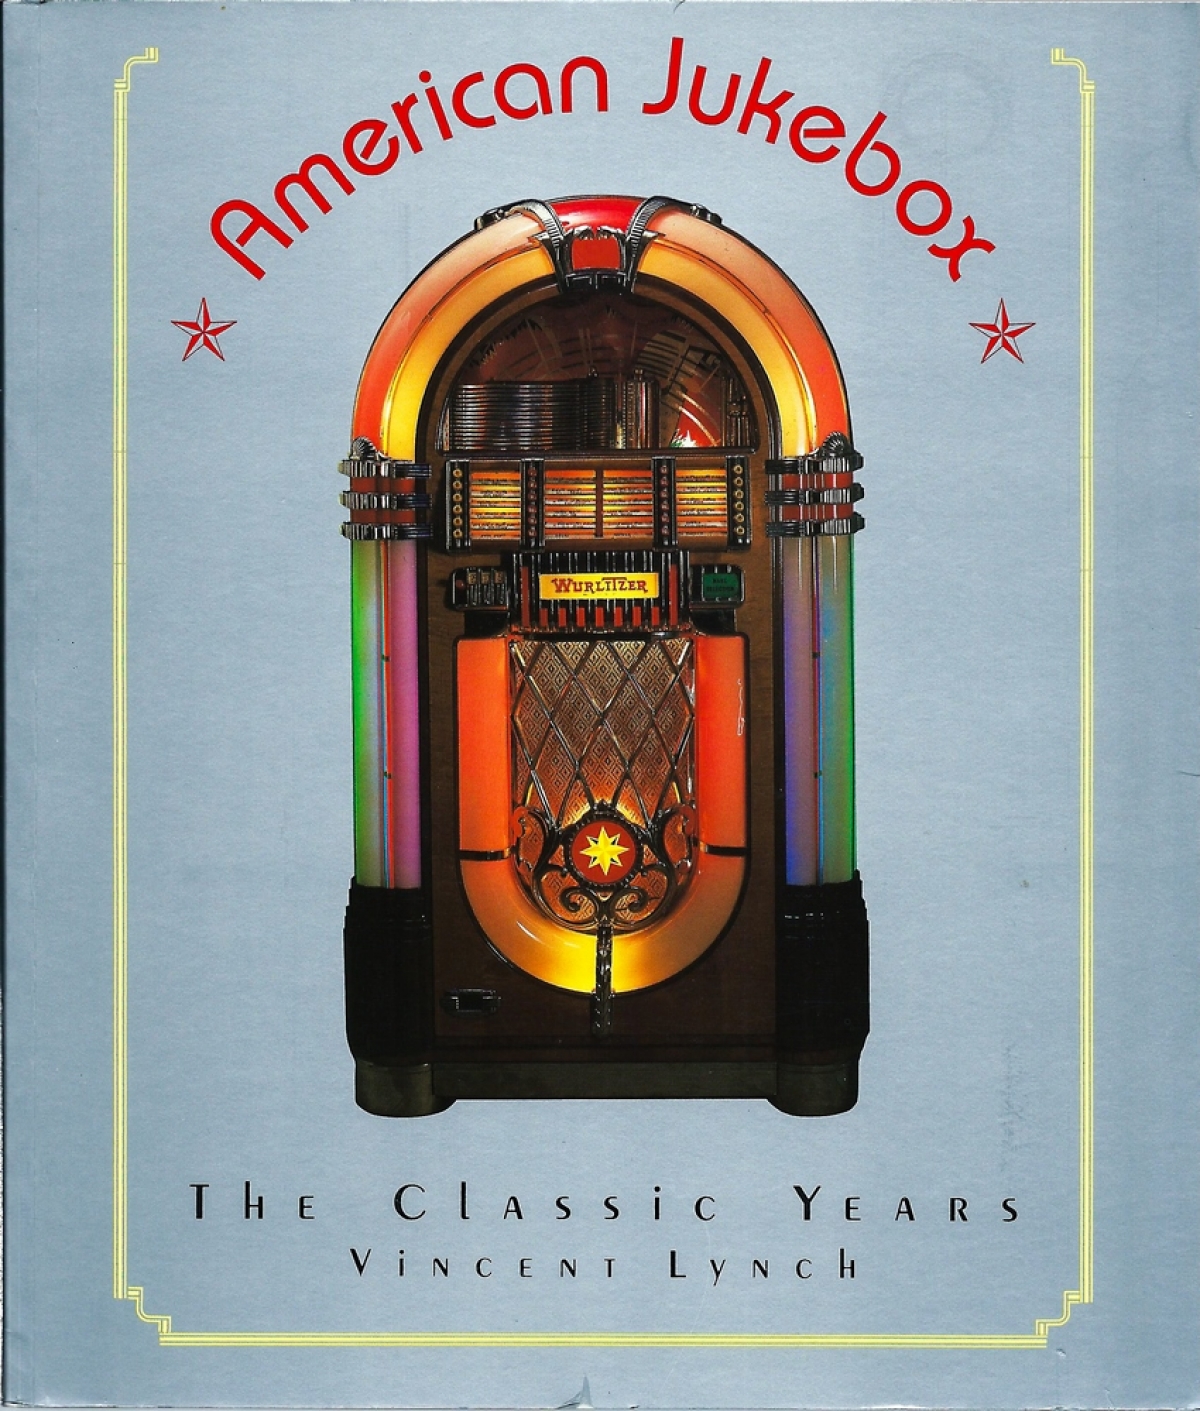 American Jukebox